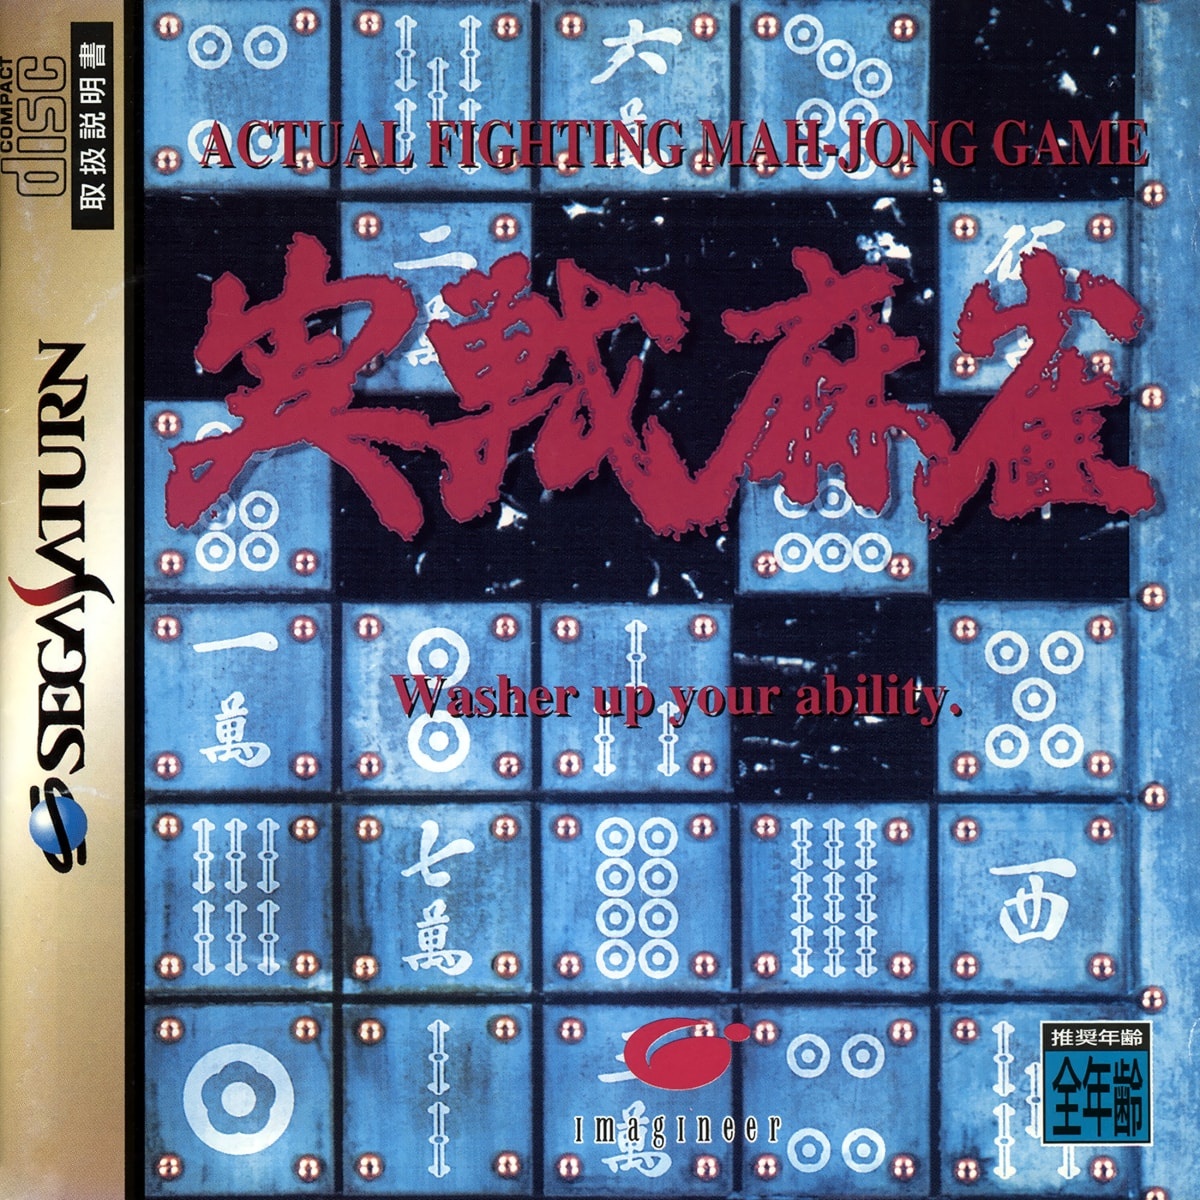 Capa do jogo Jissen Mahjong